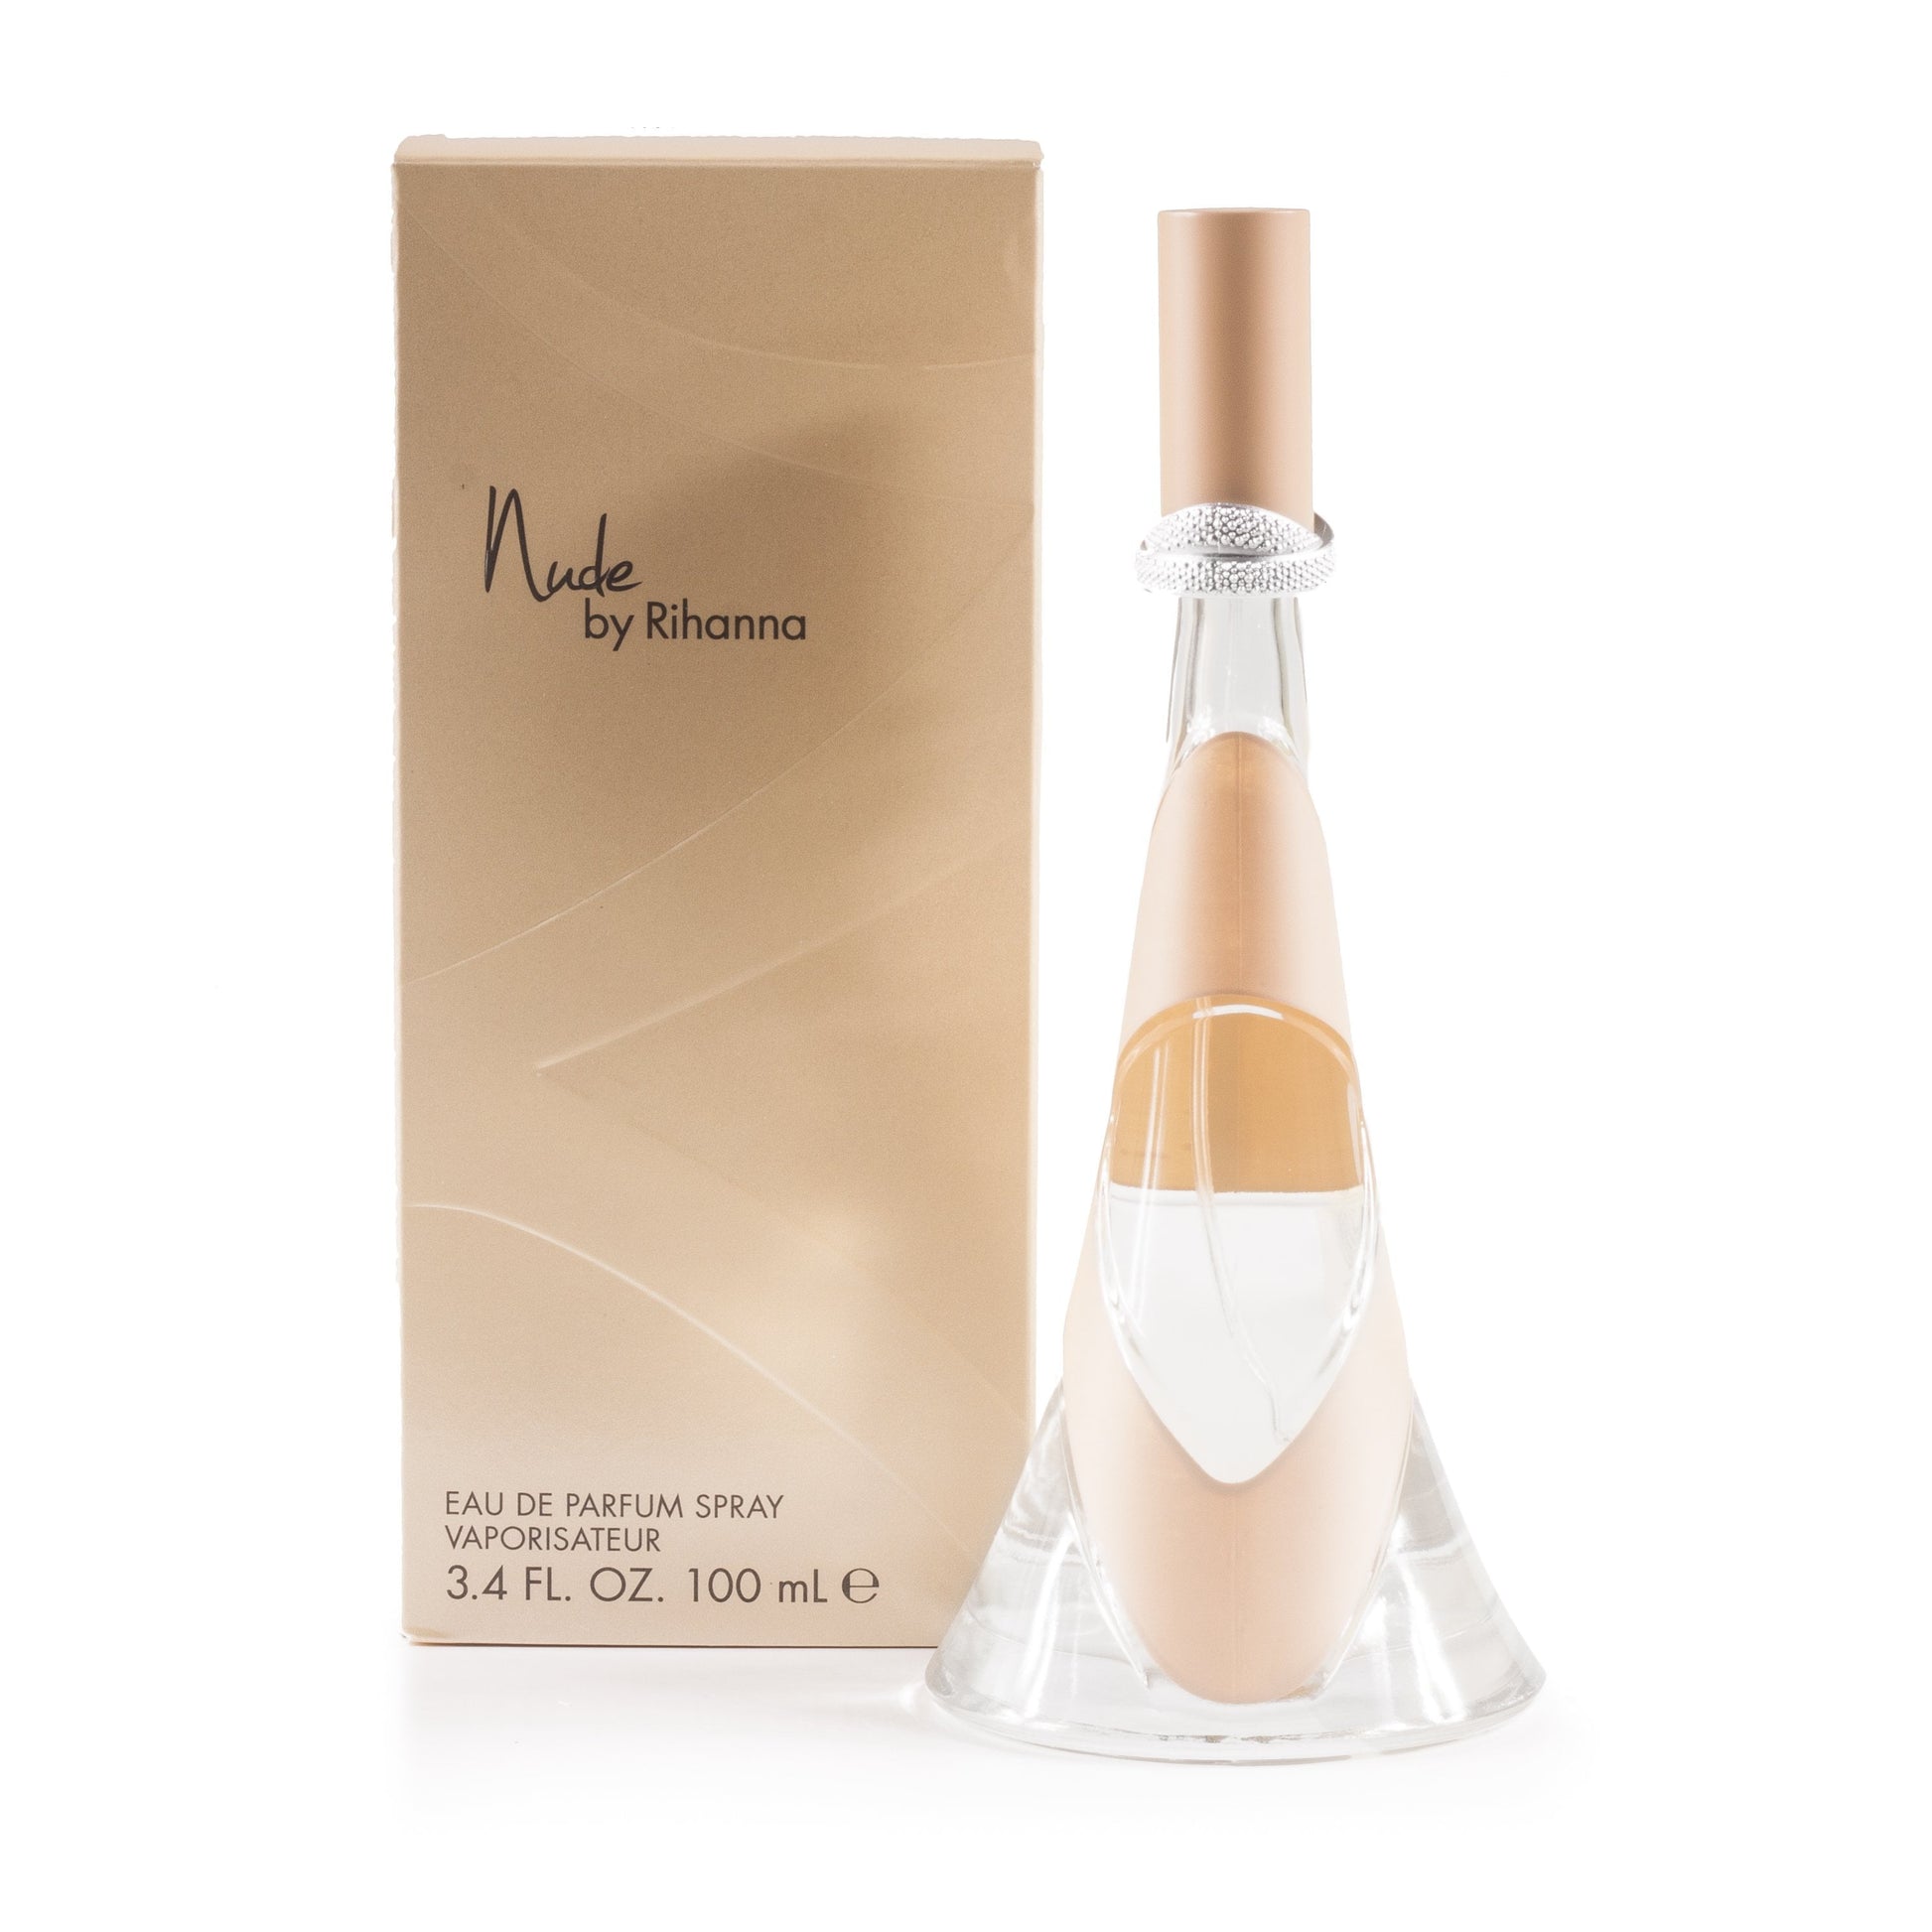 Nude Eau de Parfum Spray for Women by Rihanna, Product image 1